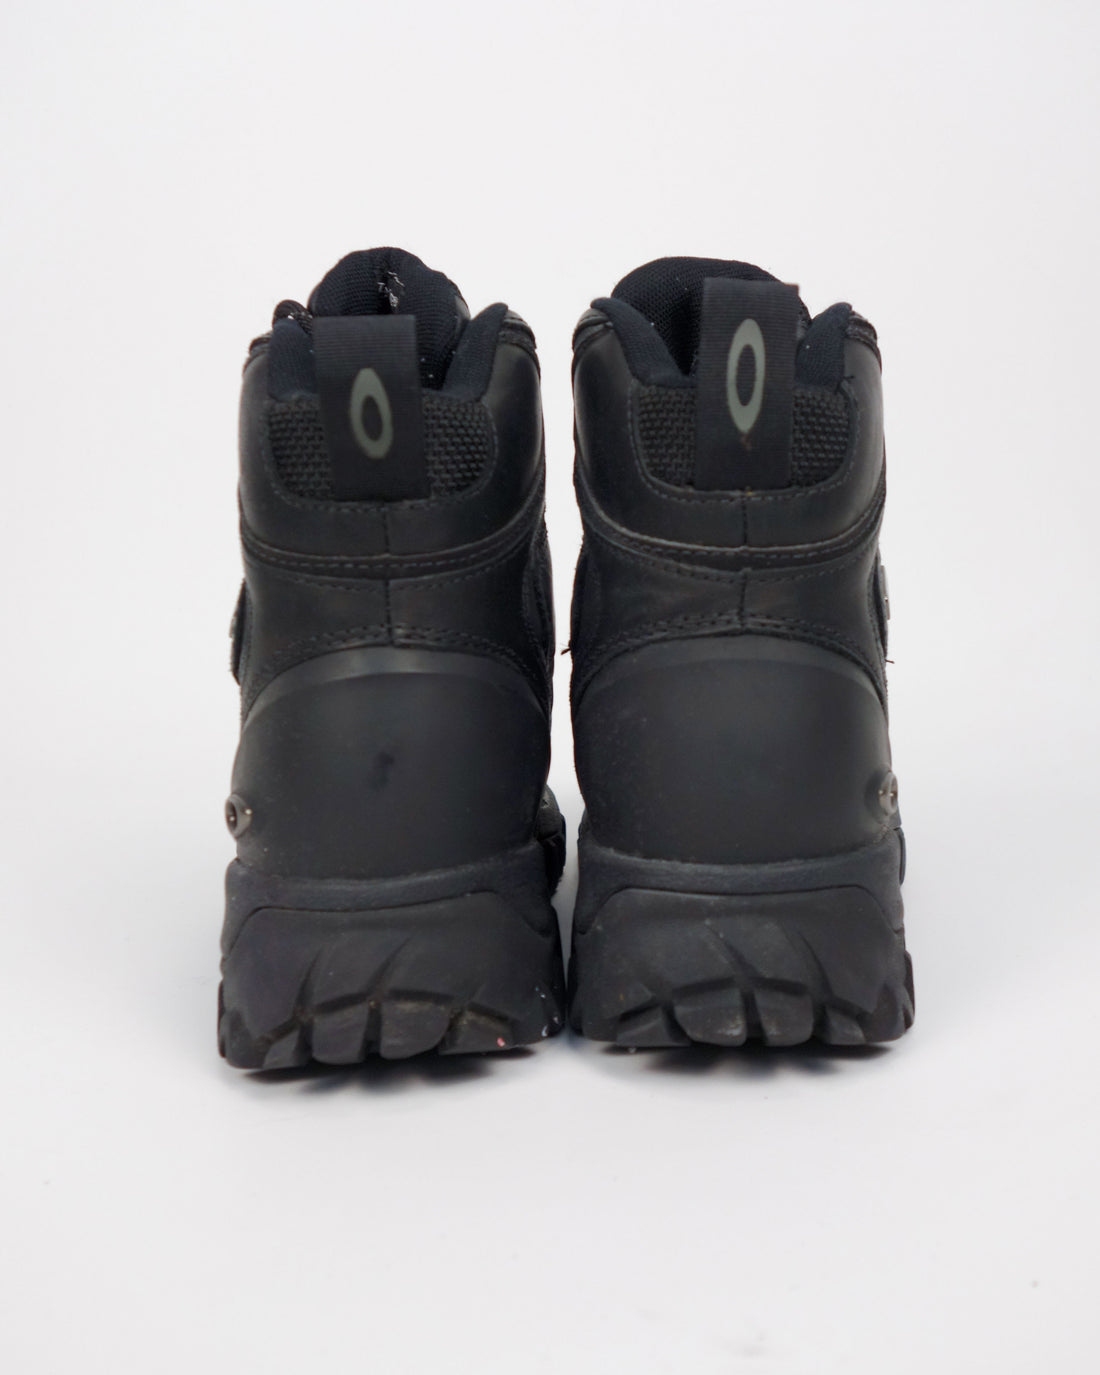 Oakley Assault Leather Black Boots 1990's